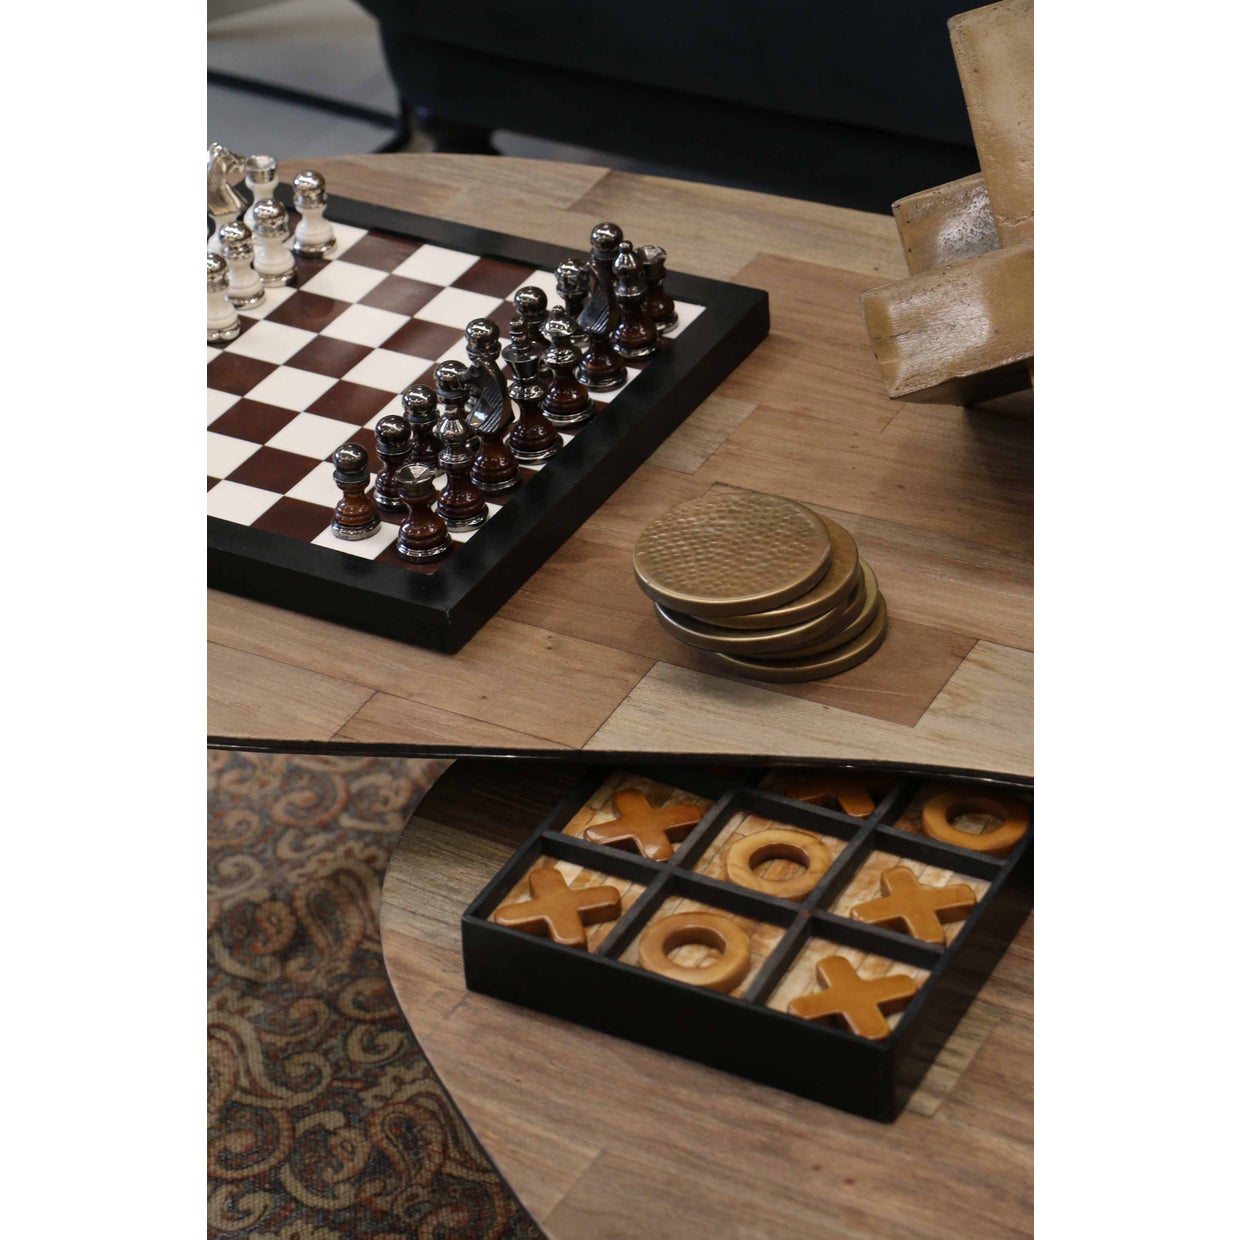 Bombay Chess Set in Chocolate and Cream